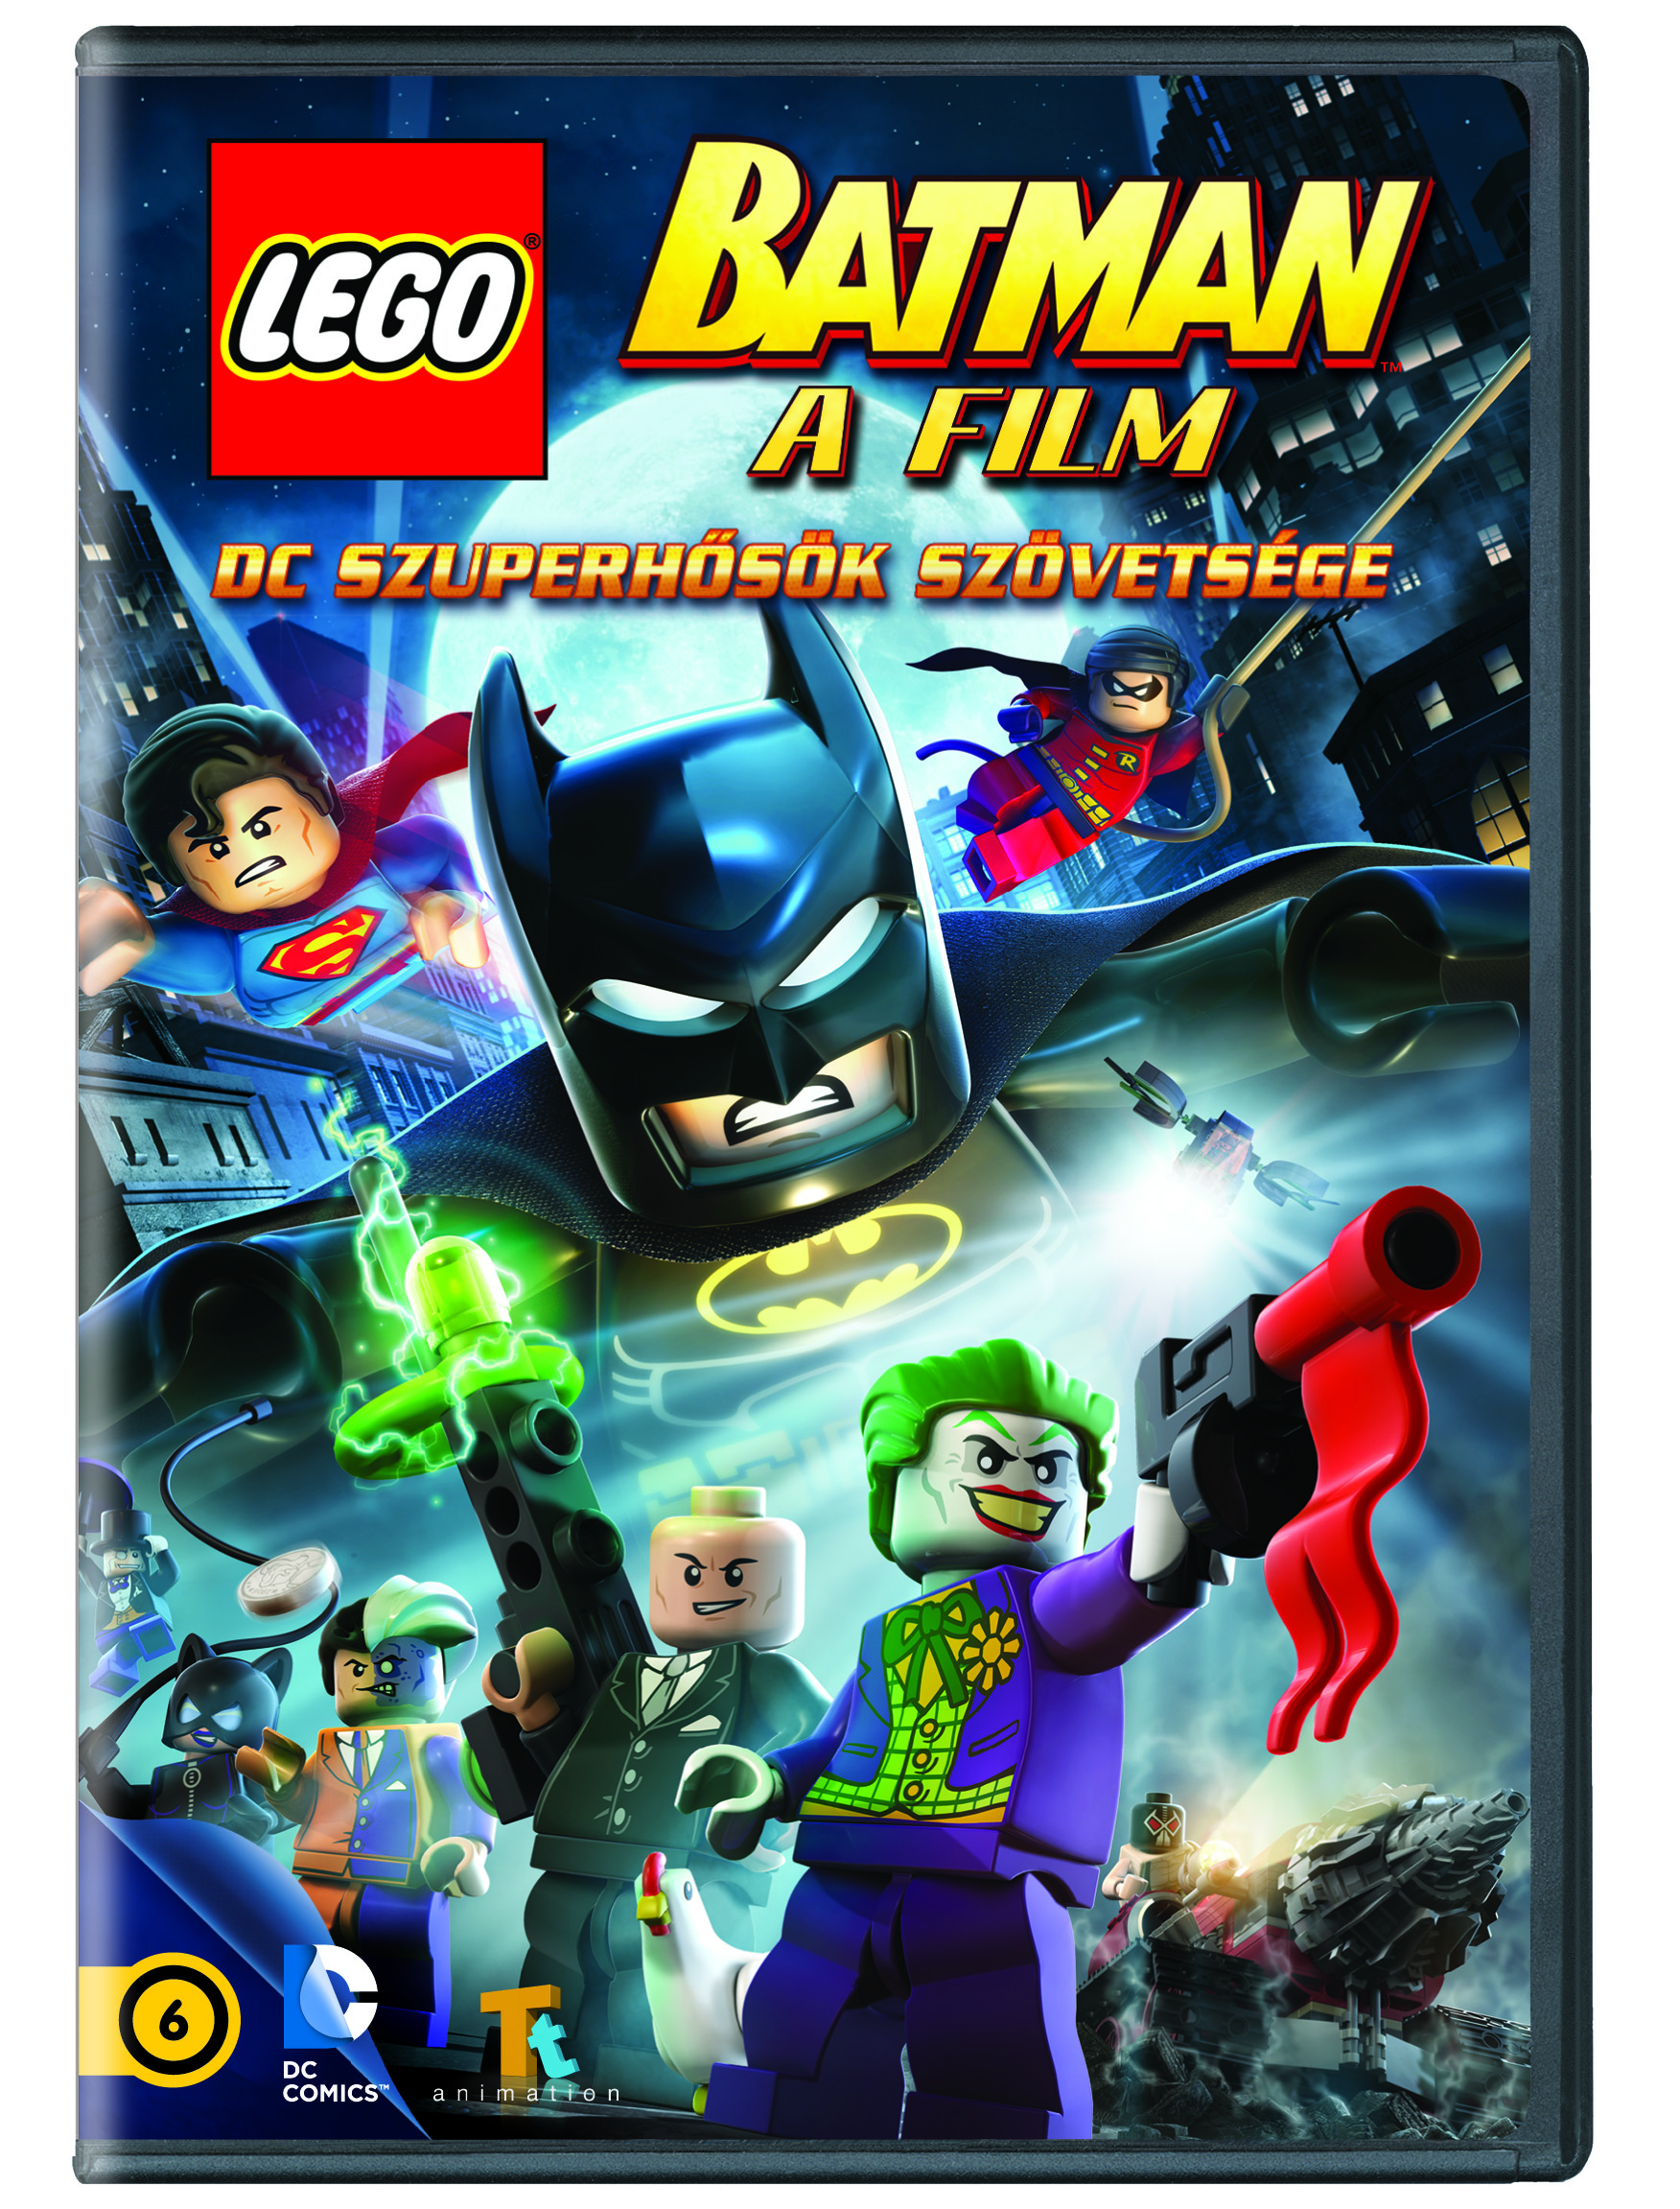 LEGO_THE BATMAN MOVIE_2D_HU.jpg